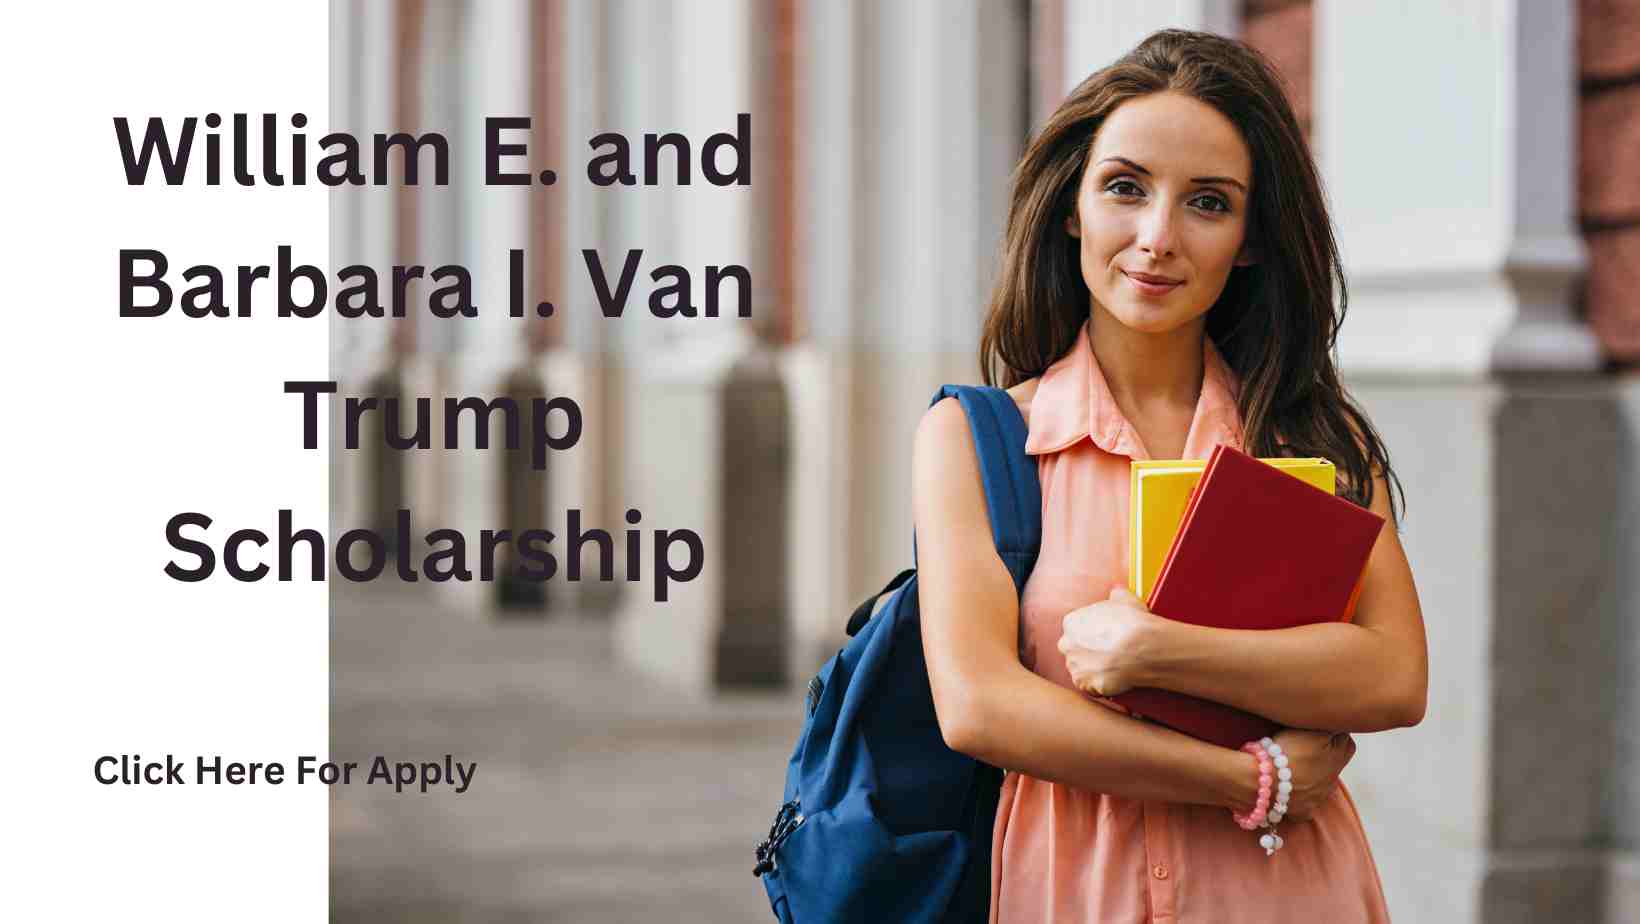 William E. and Barbara I. Van Trump Scholarship